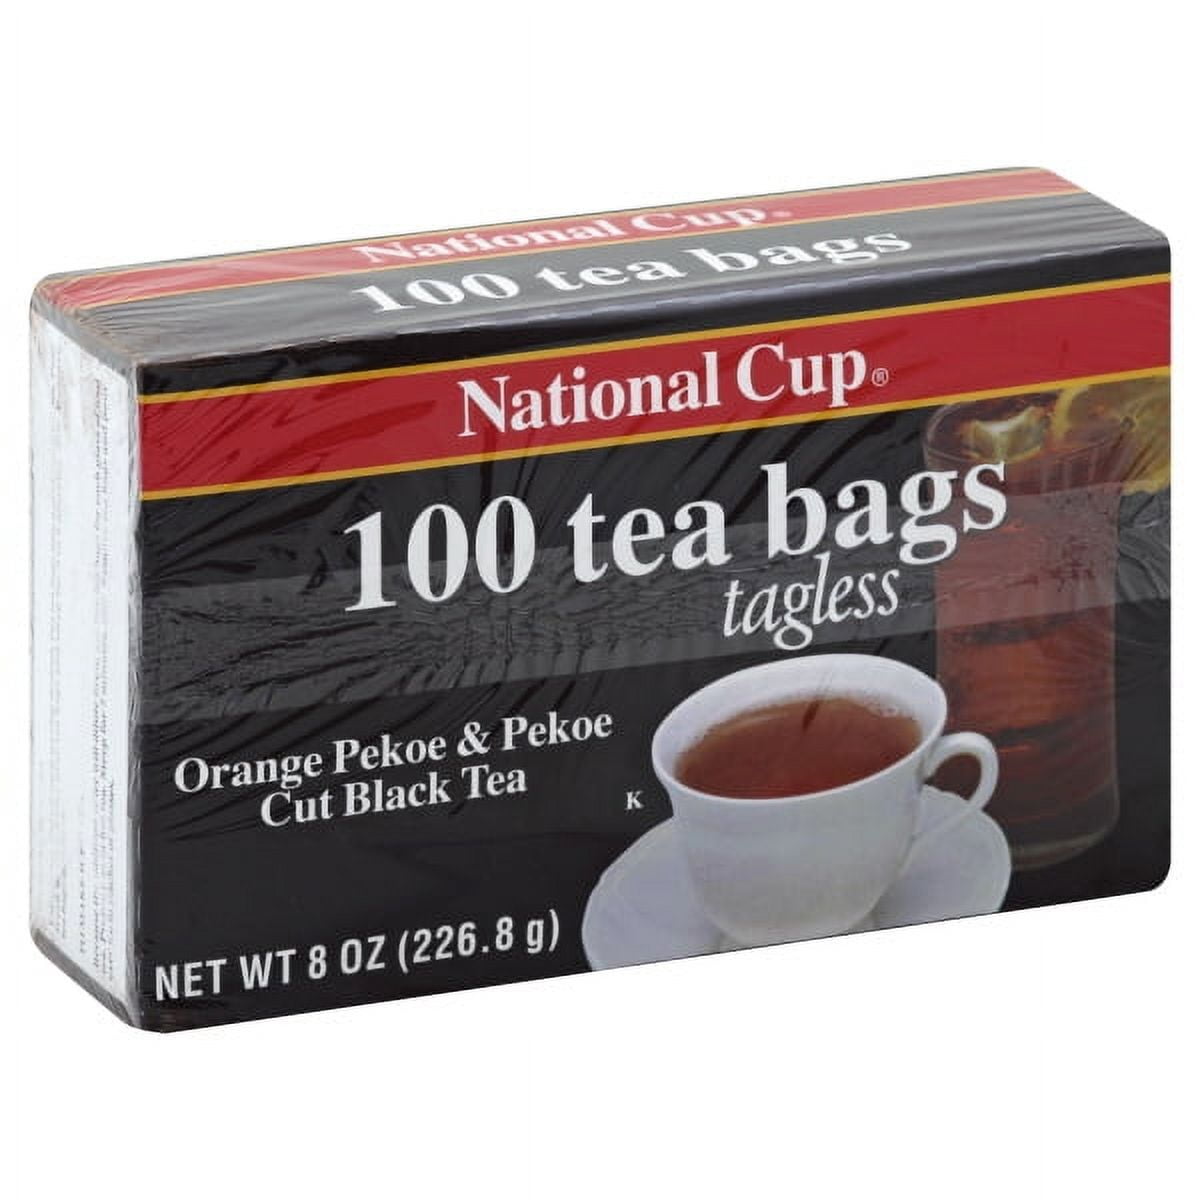 Golden Tip 100 tea bags, orange pekoe & pekoe cut black tea 6.4-oz